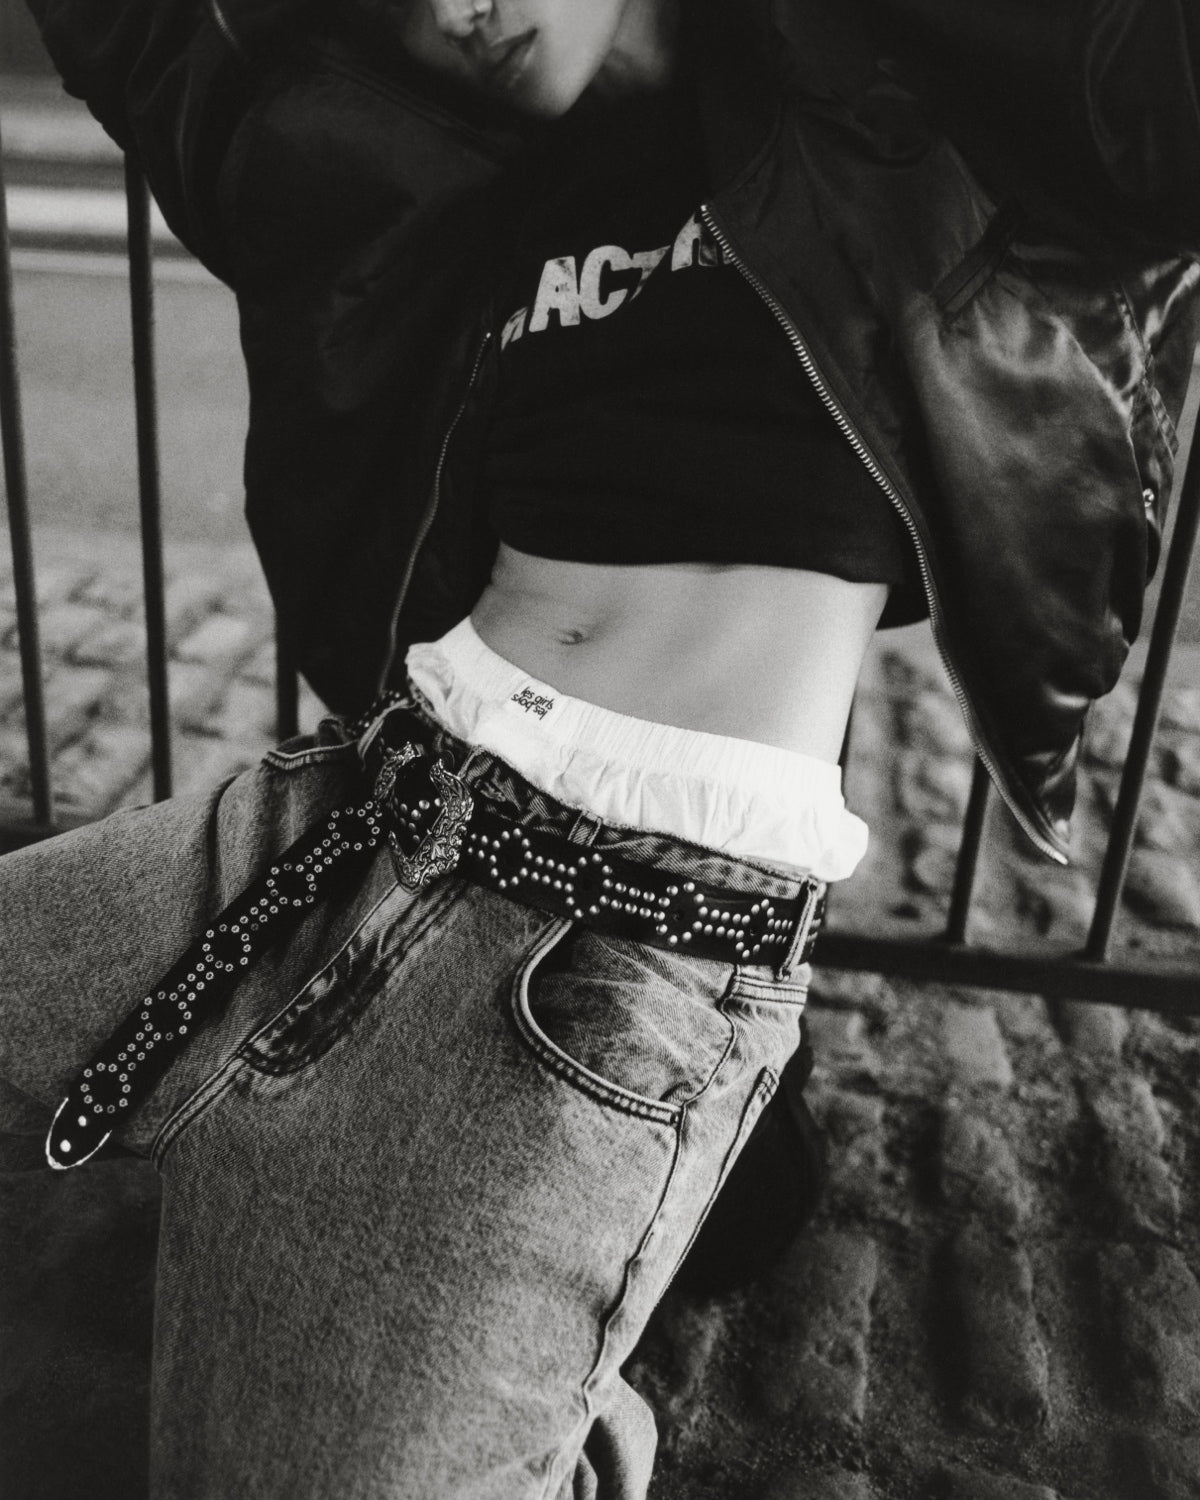 Lara western studded black jeans belt